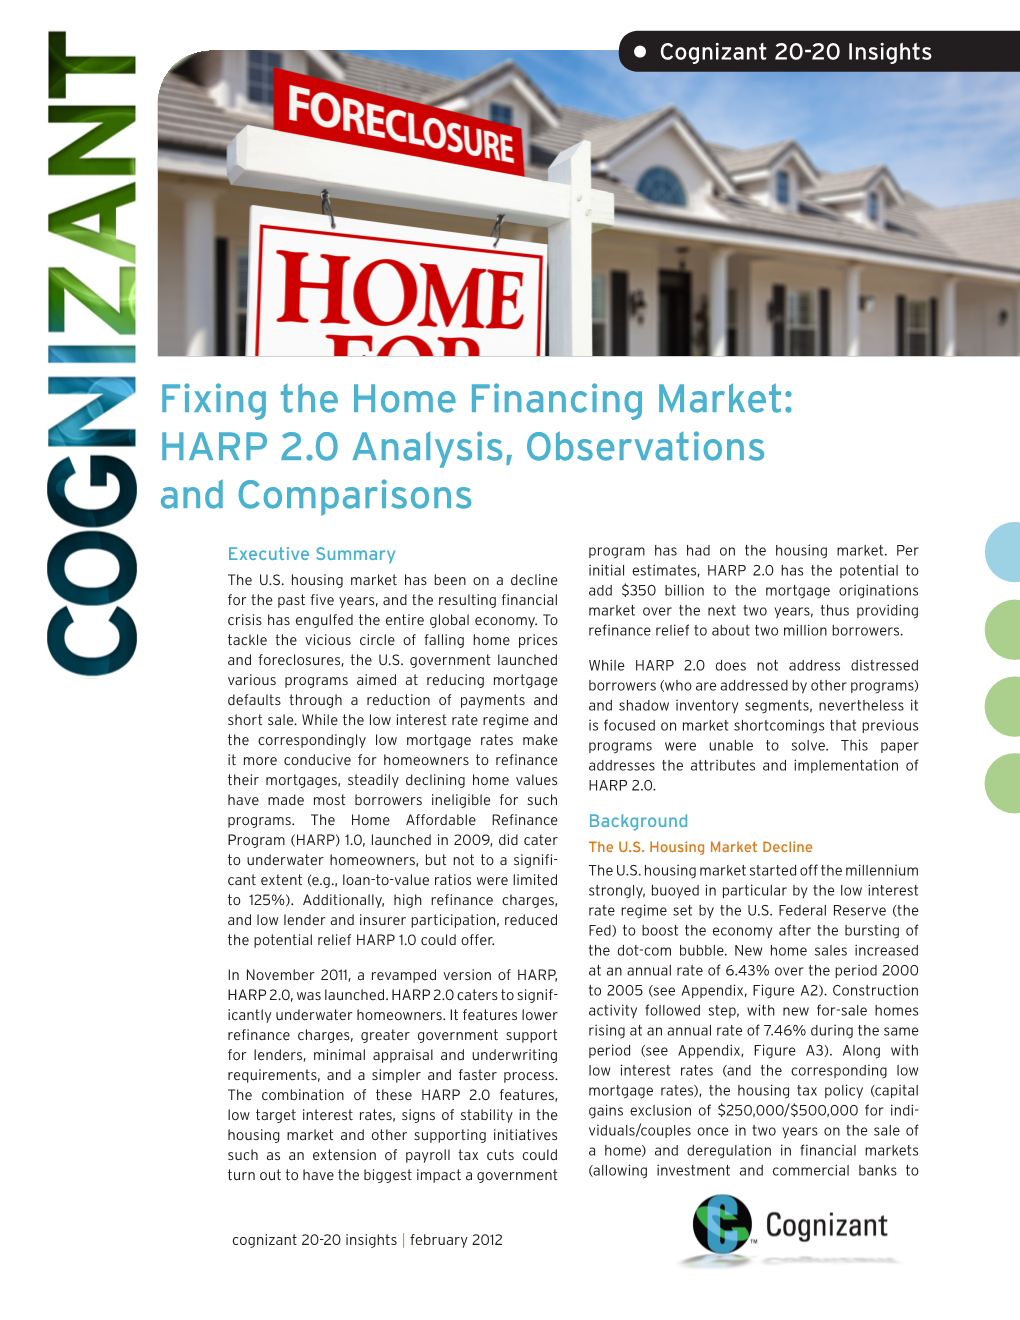 Fixing the Home Finance Market: HARP 2.0 Analysis